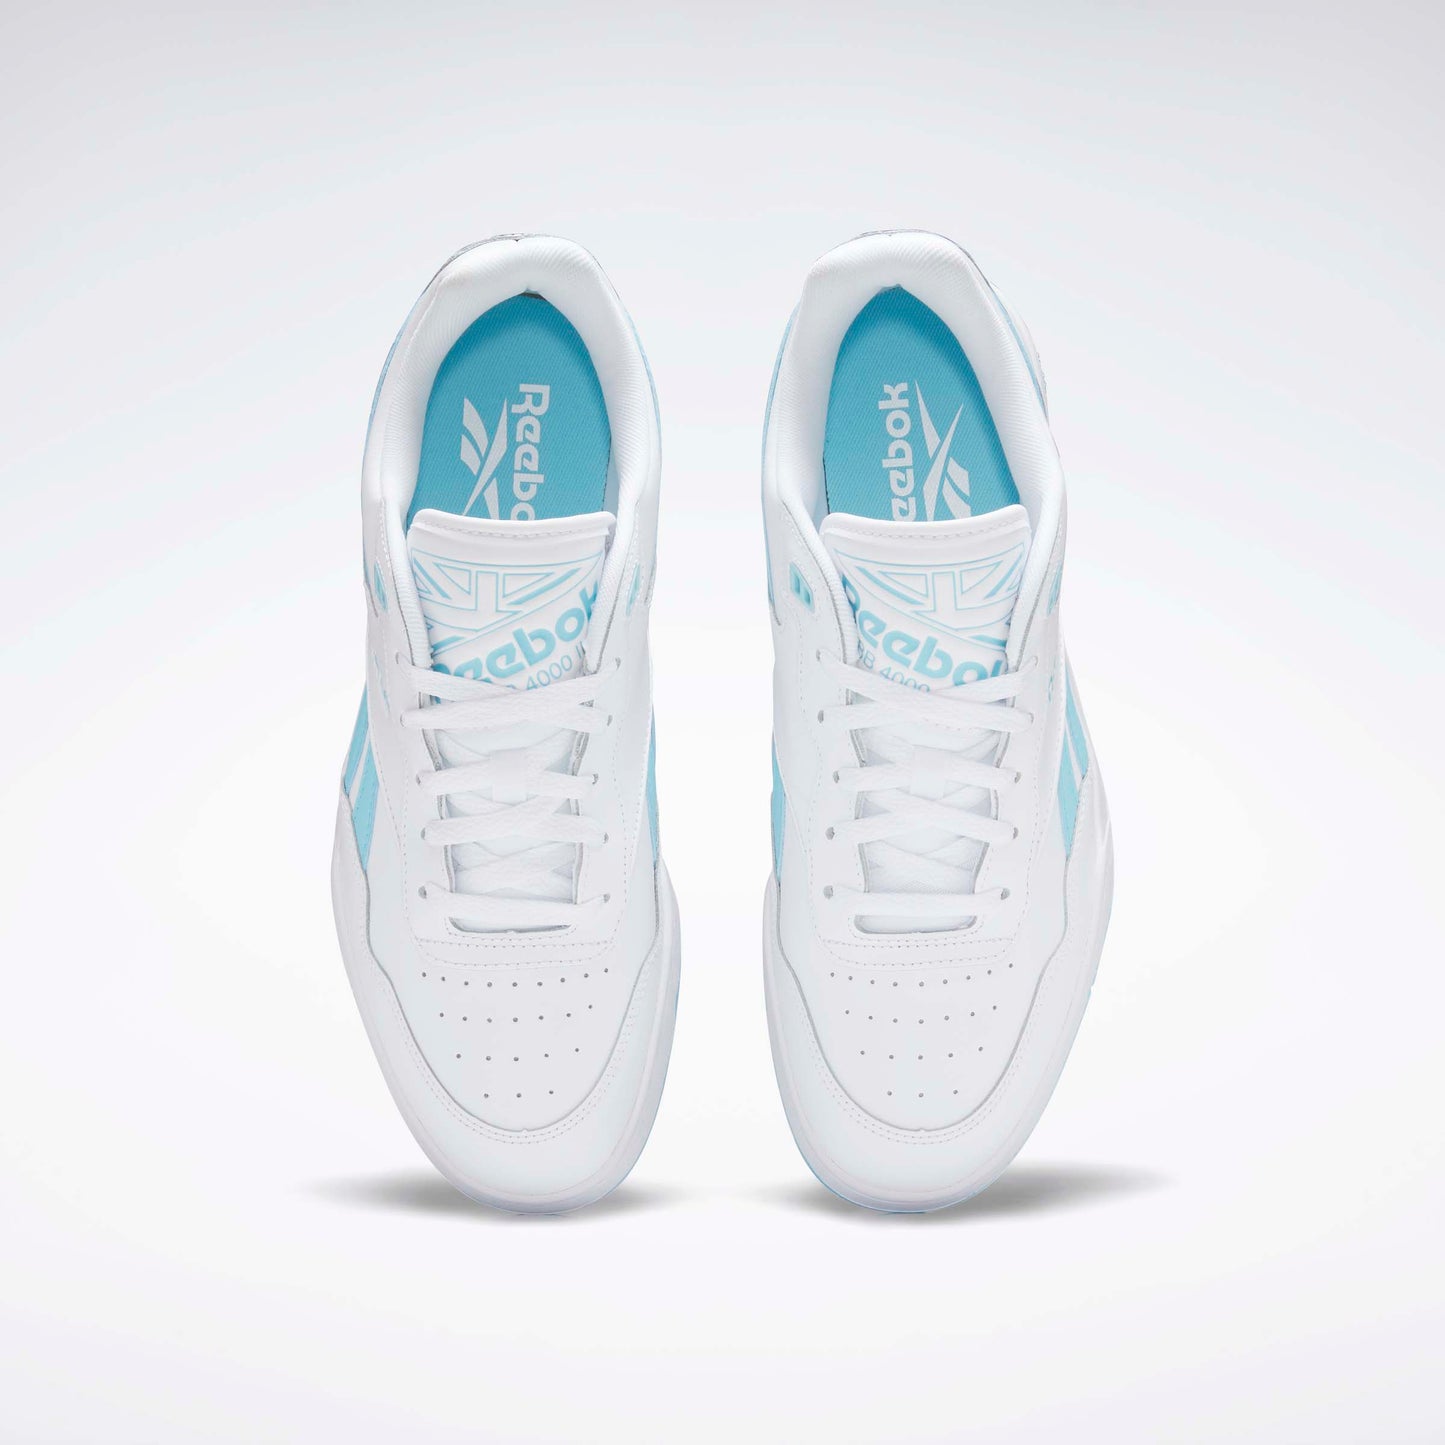 BB 4000 II Shoes White/Digital Blue/White